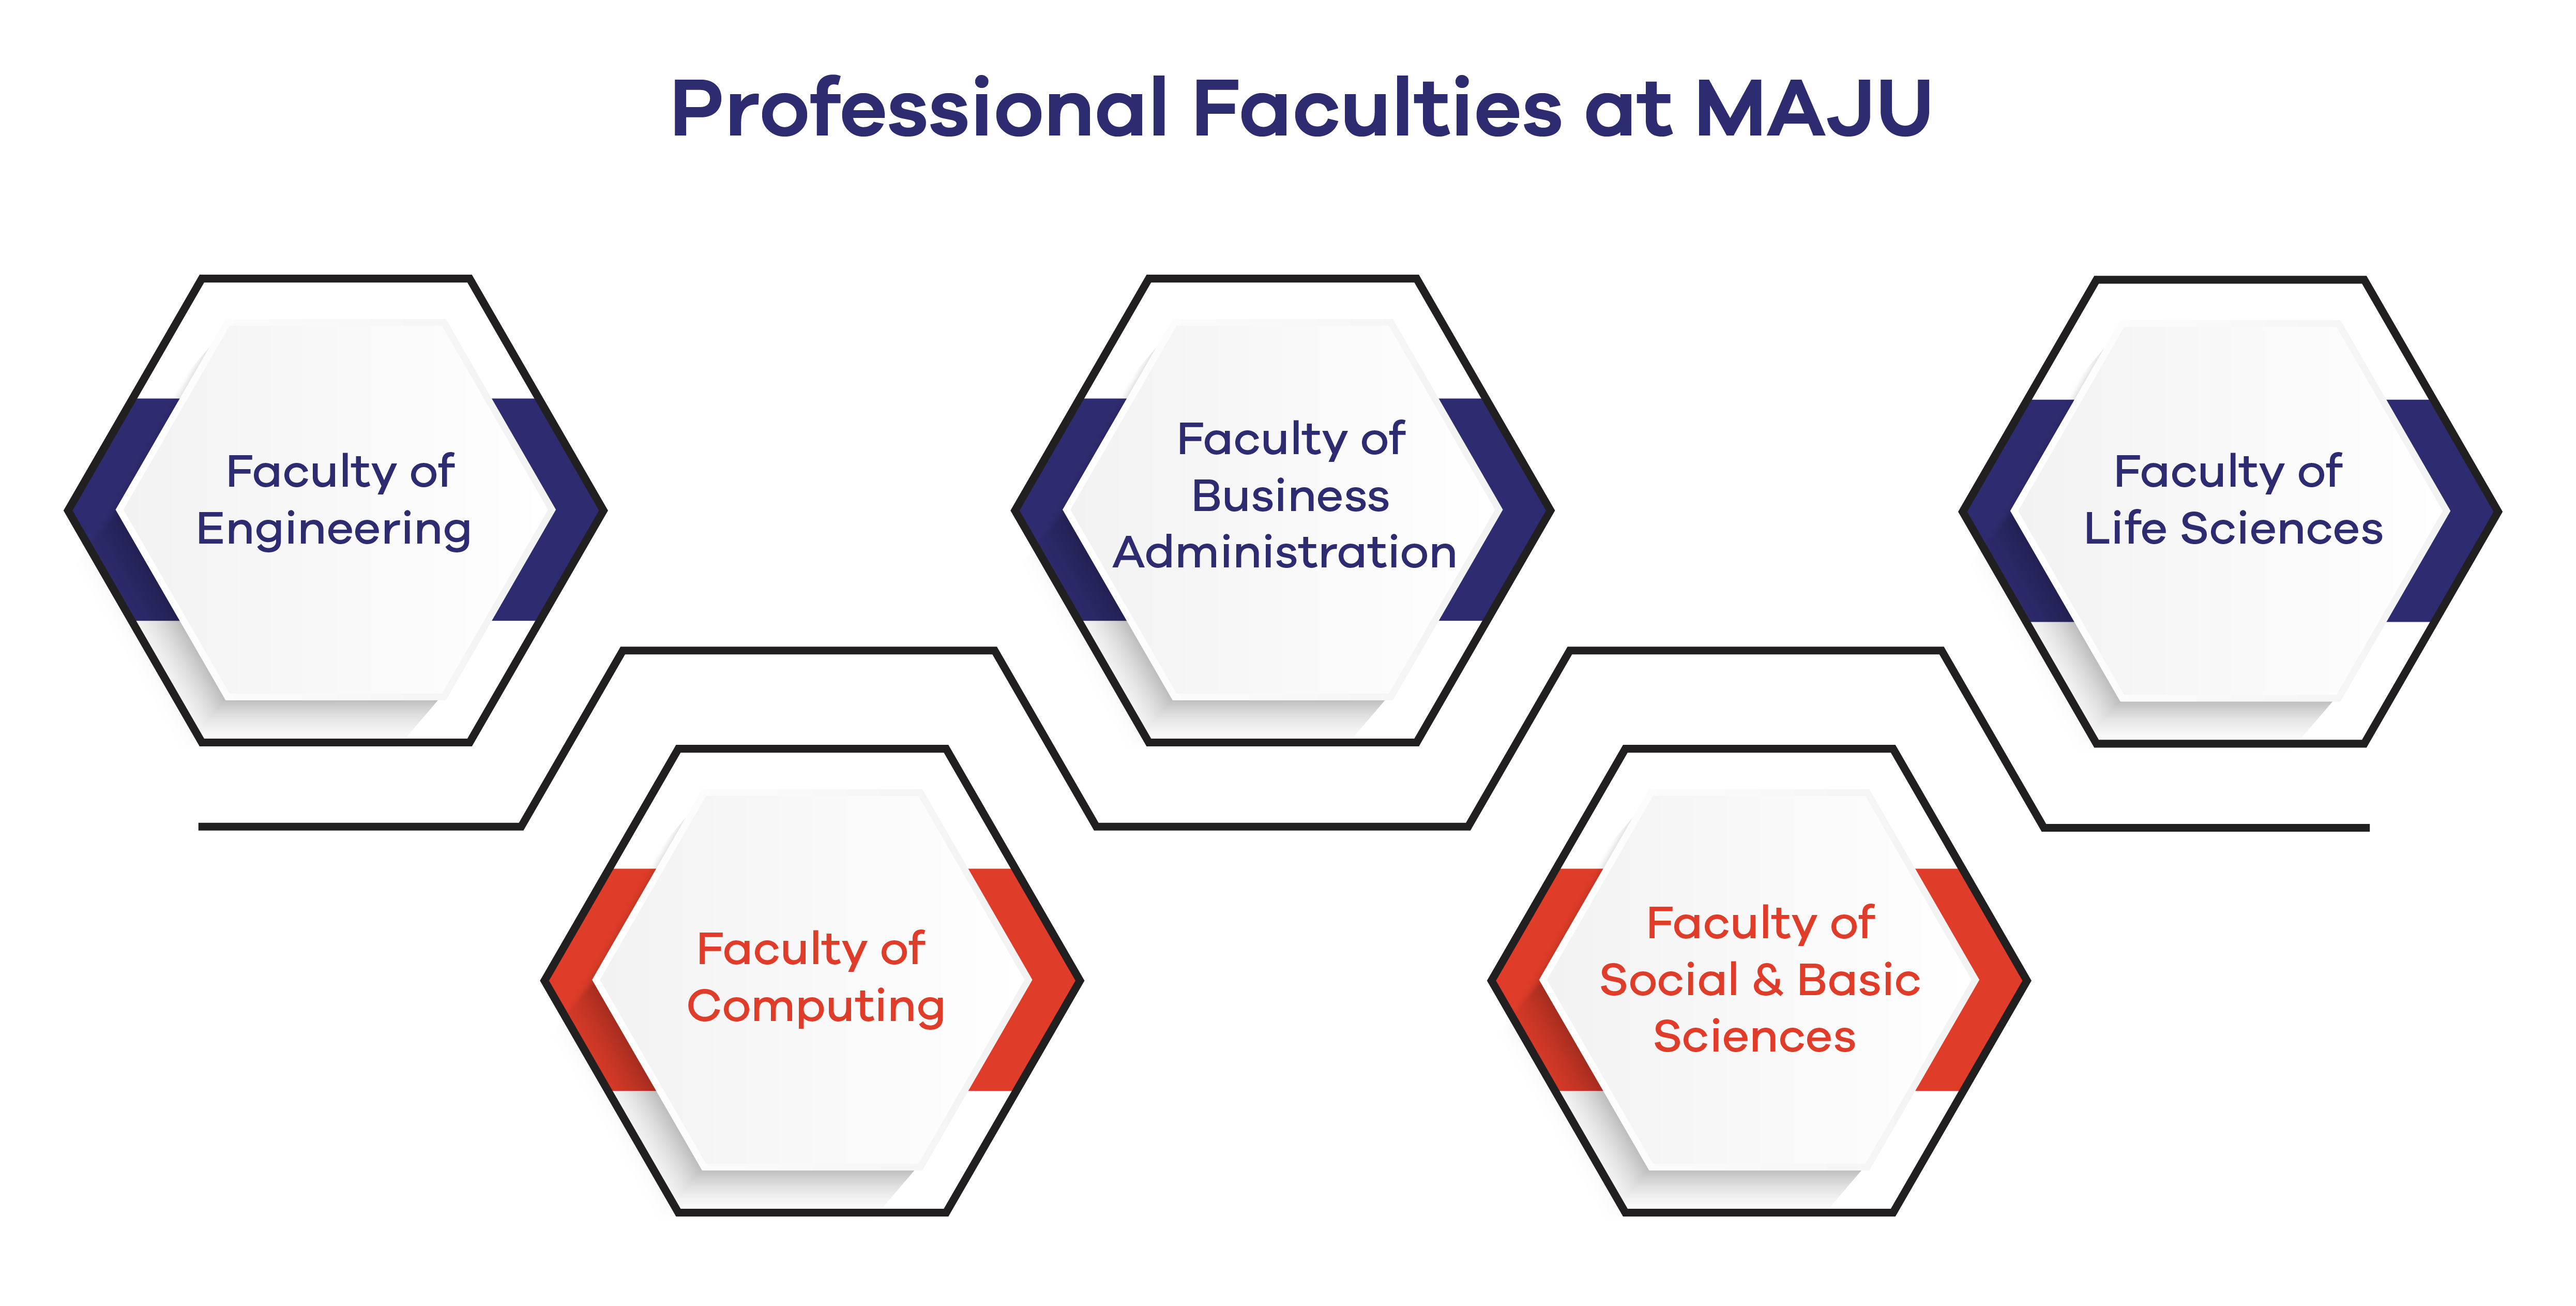 Professional Faculties at MAJU